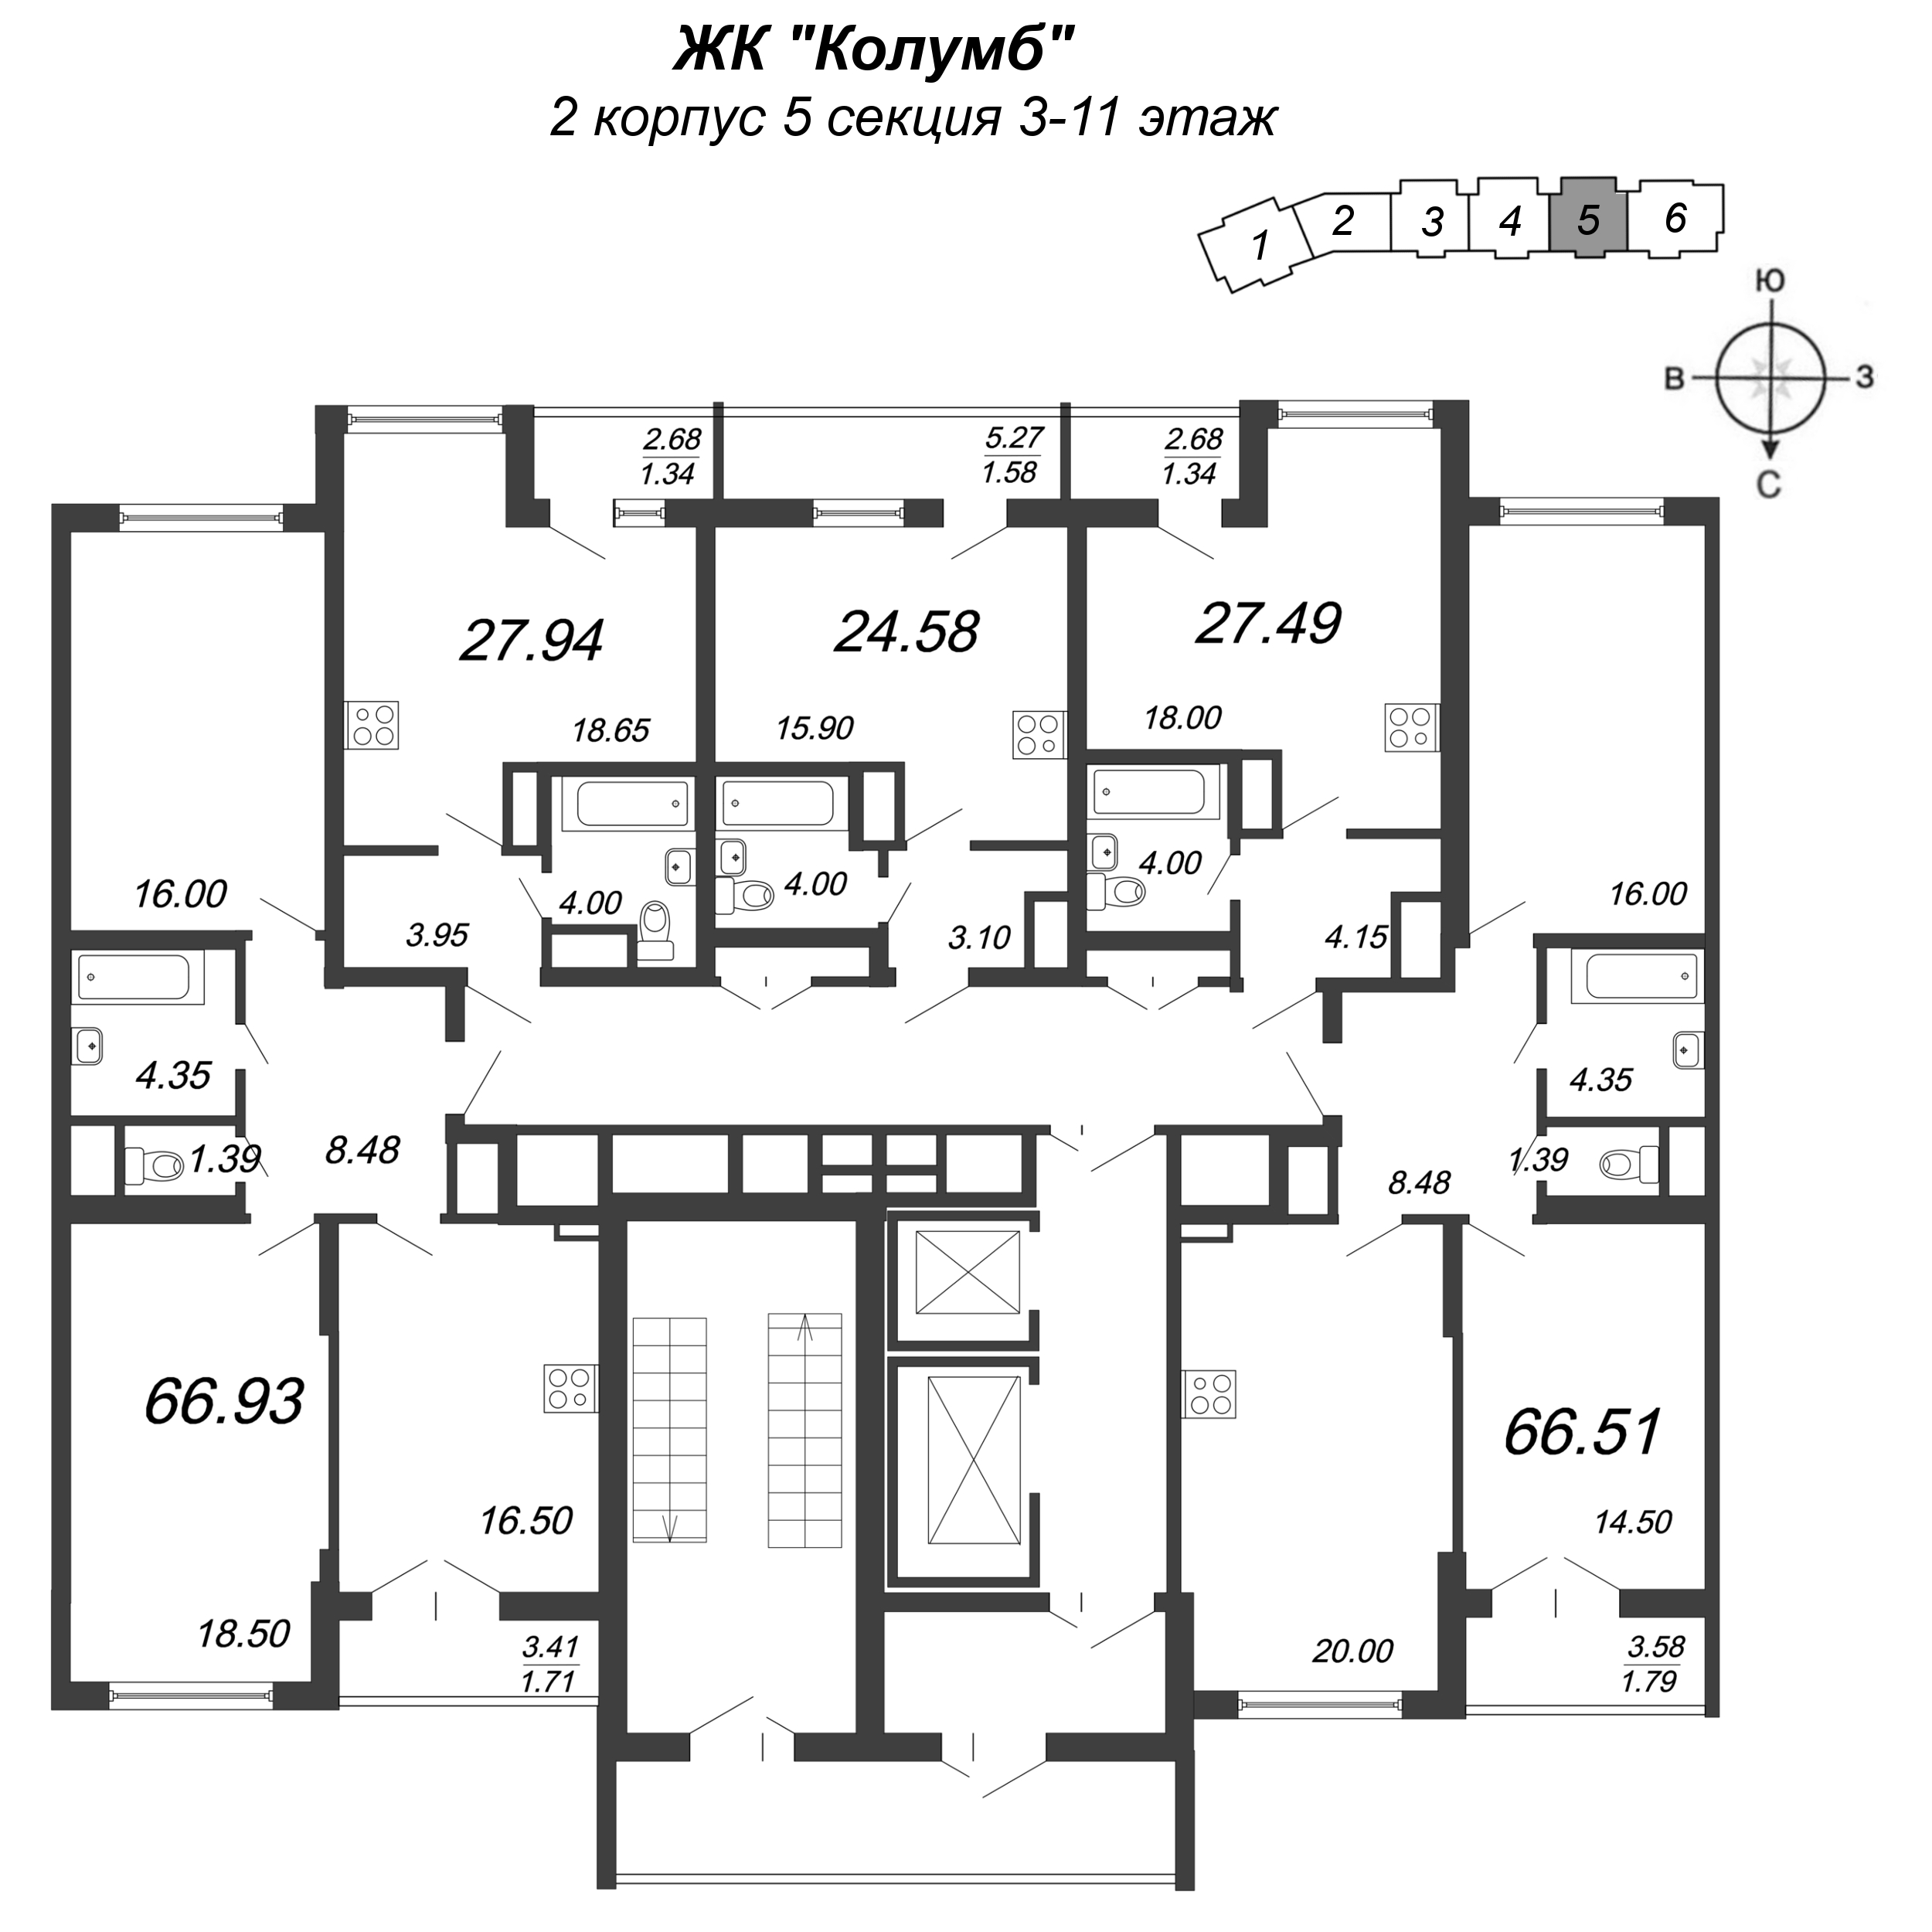 3-комнатная (Евро) квартира, 67.8 м² в ЖК "Колумб" - планировка этажа